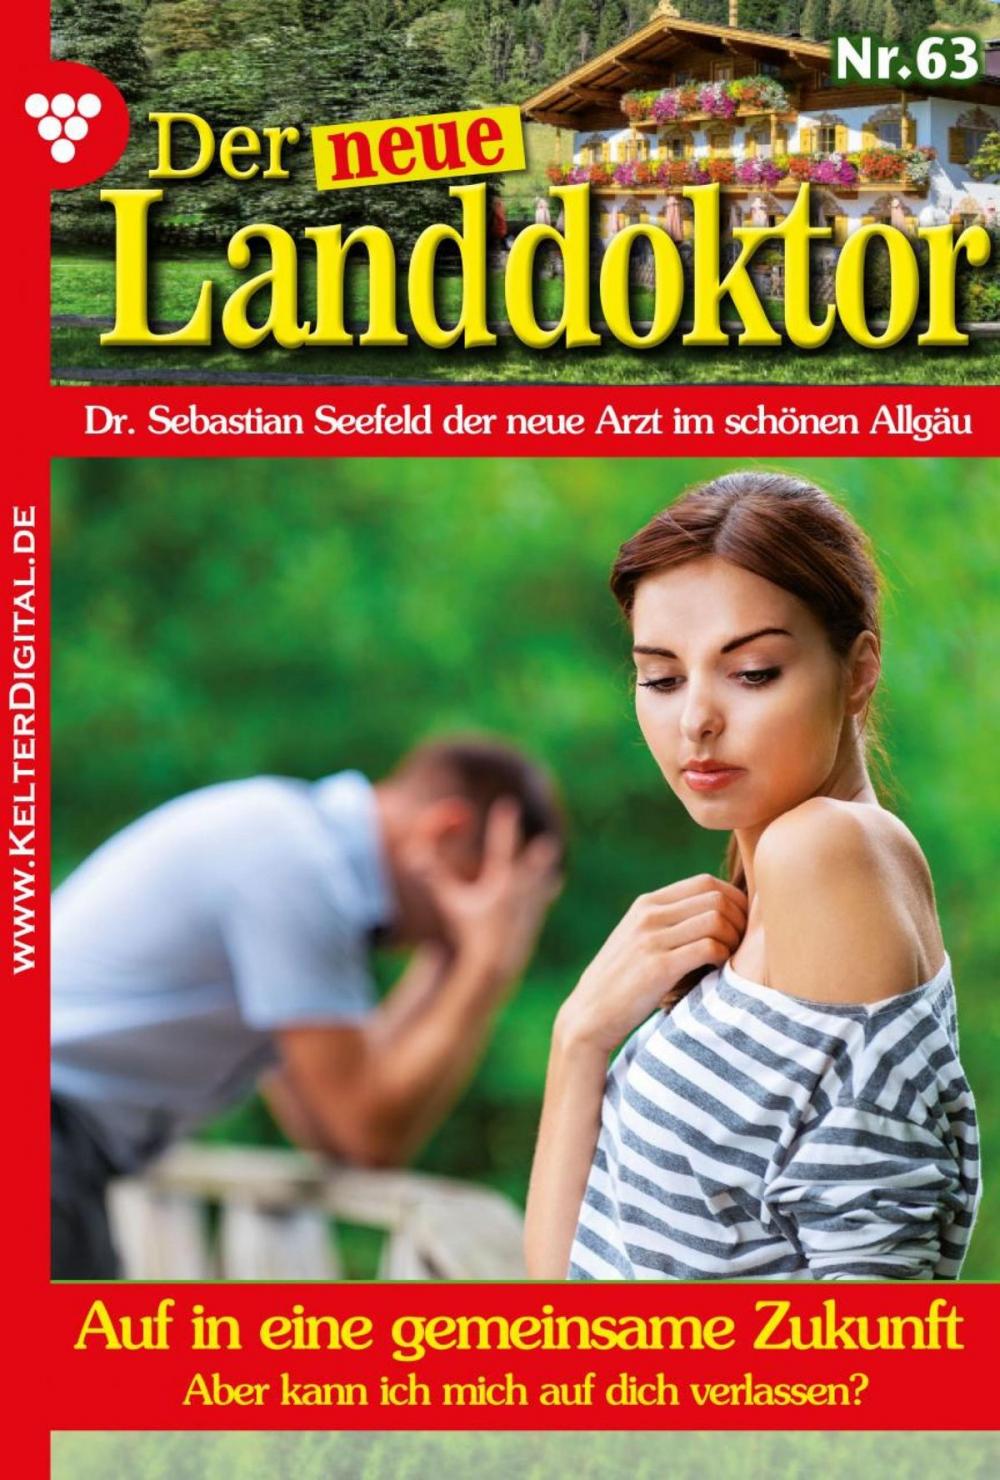 Big bigCover of Der neue Landdoktor 63 – Arztroman